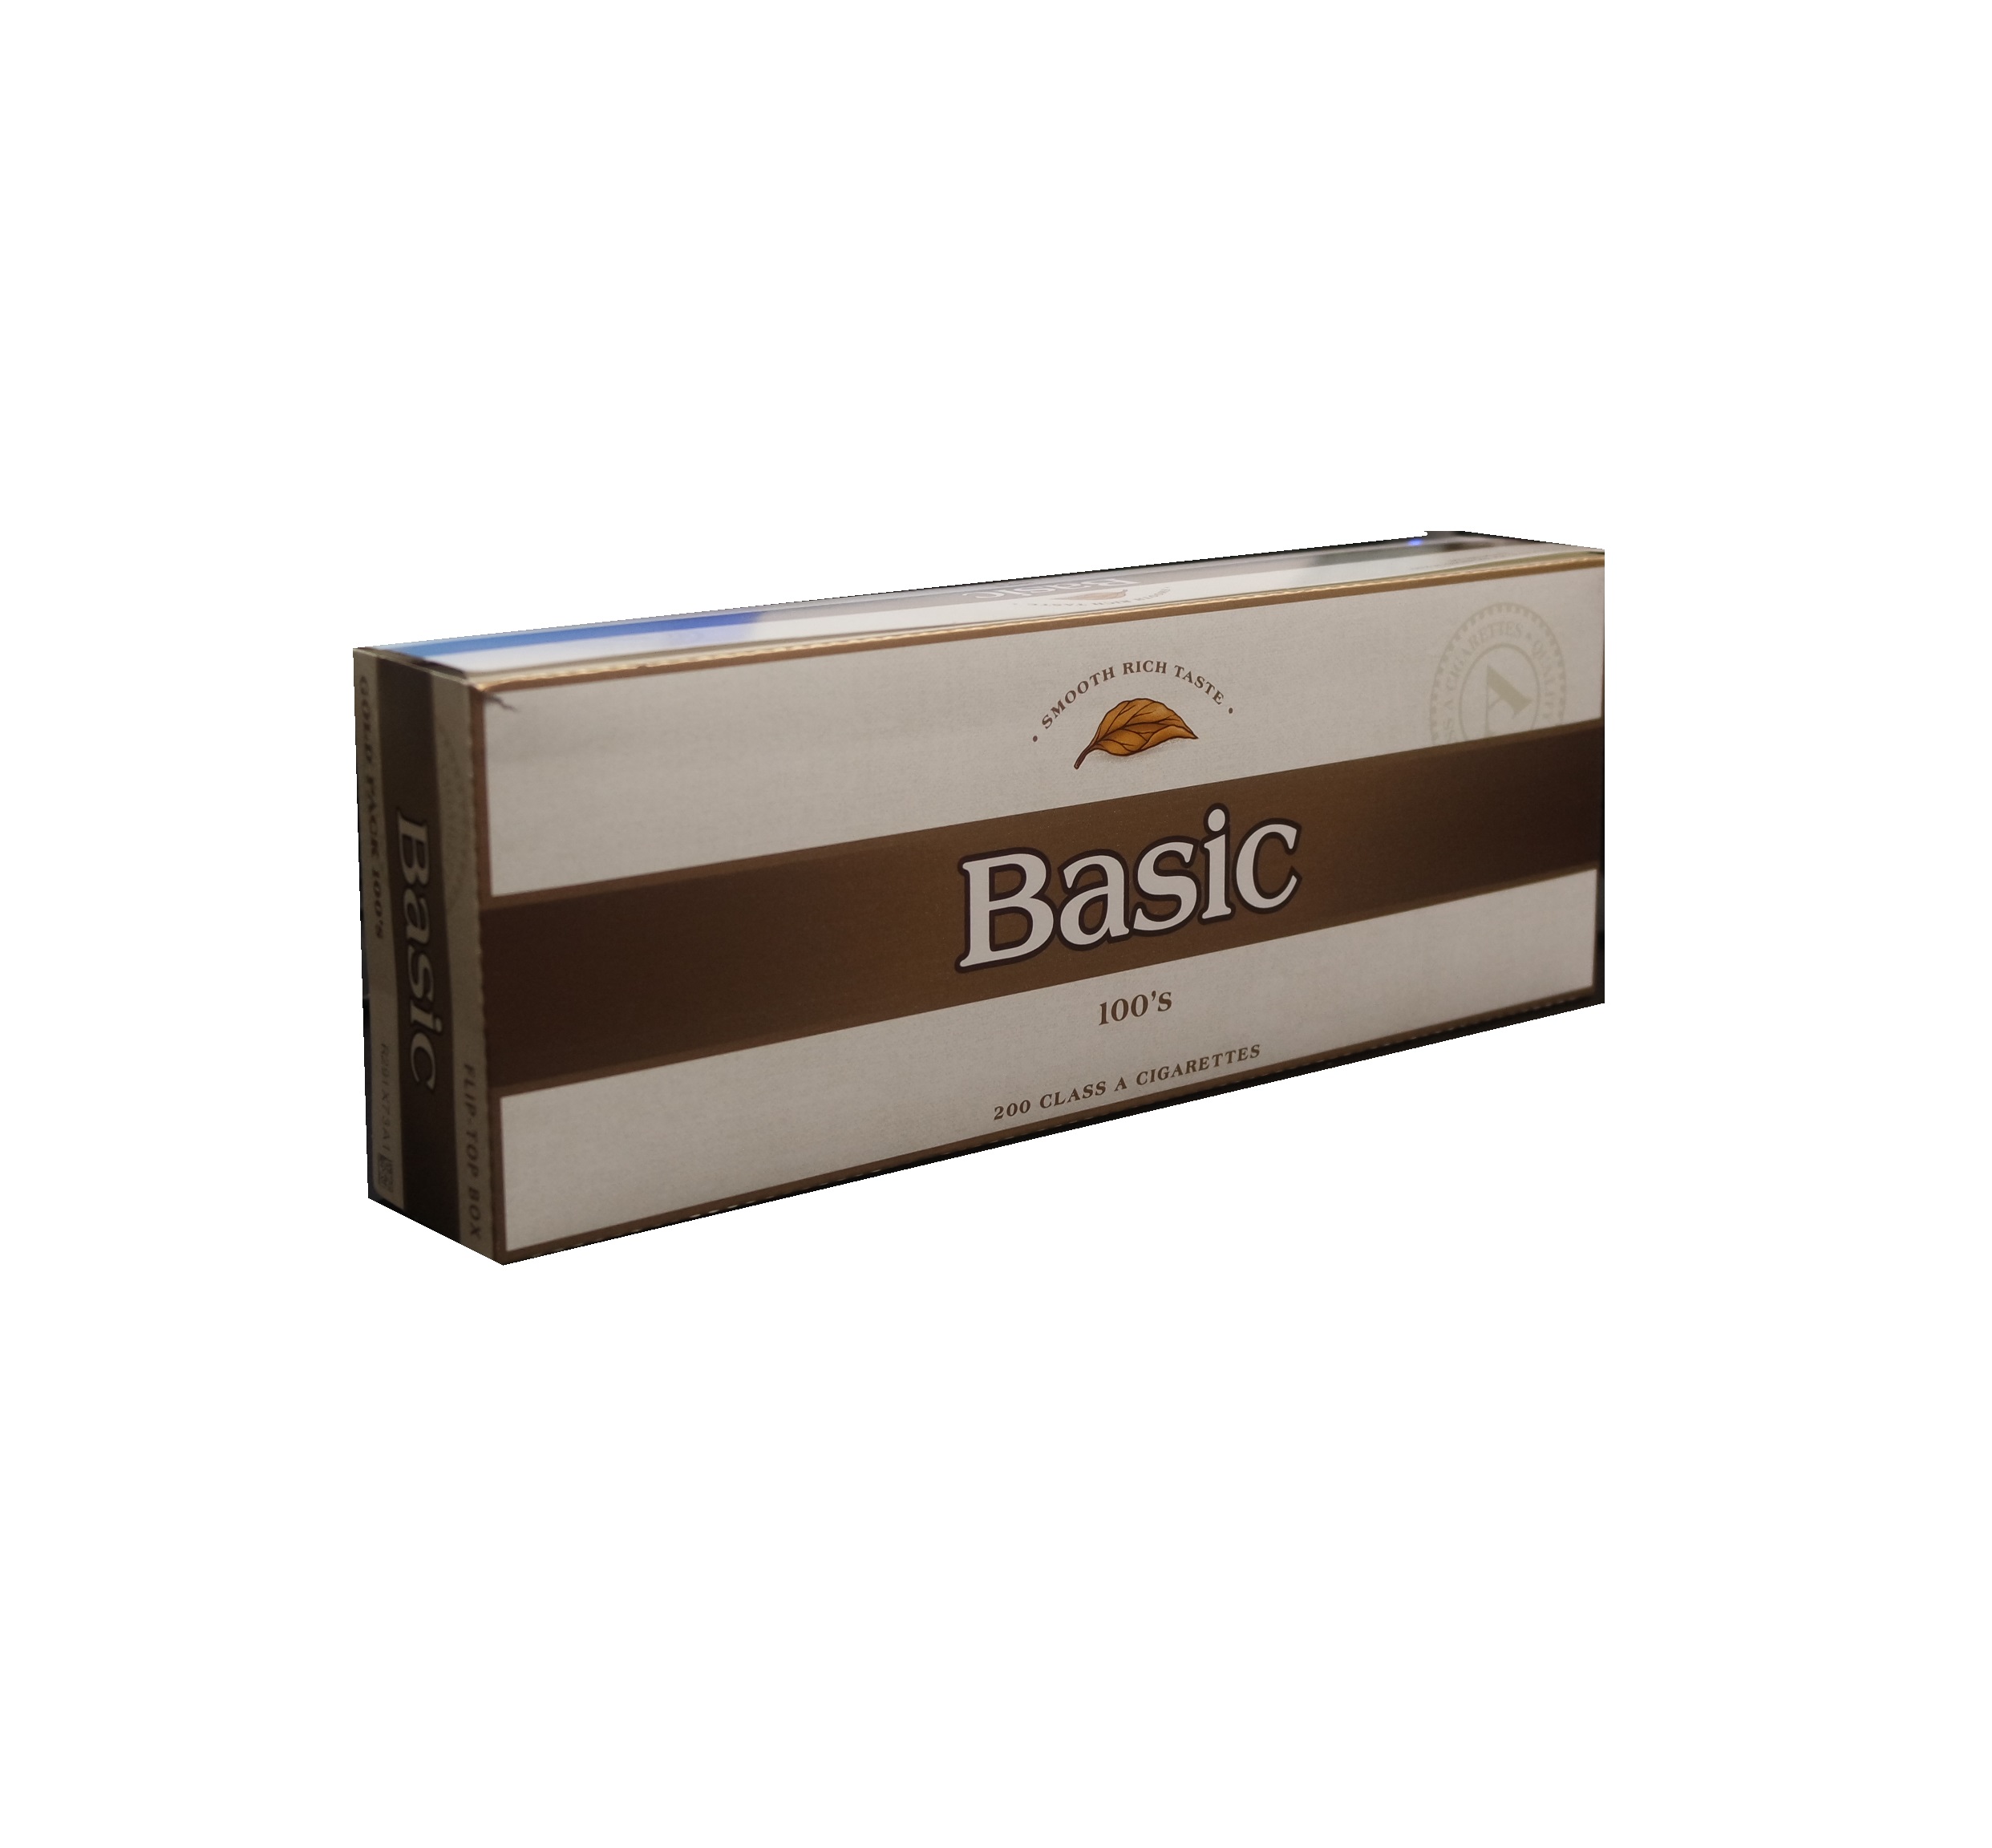 Basic gold 100 box